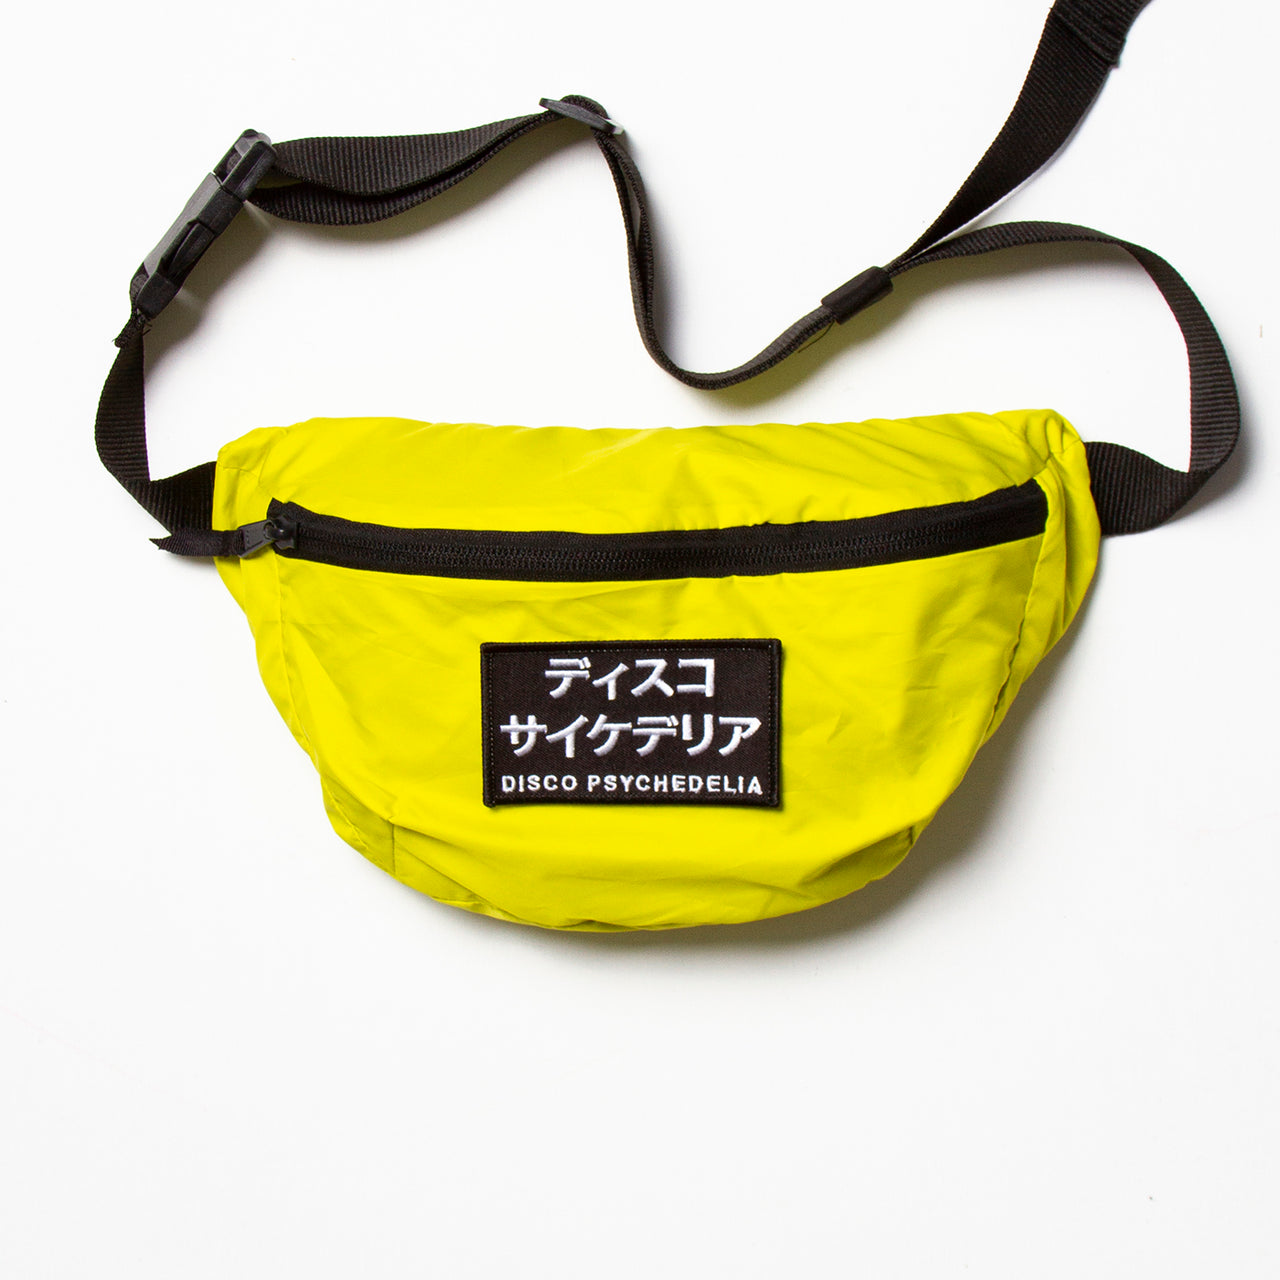 Disco Psychedelia - Bum Bag - Yellow